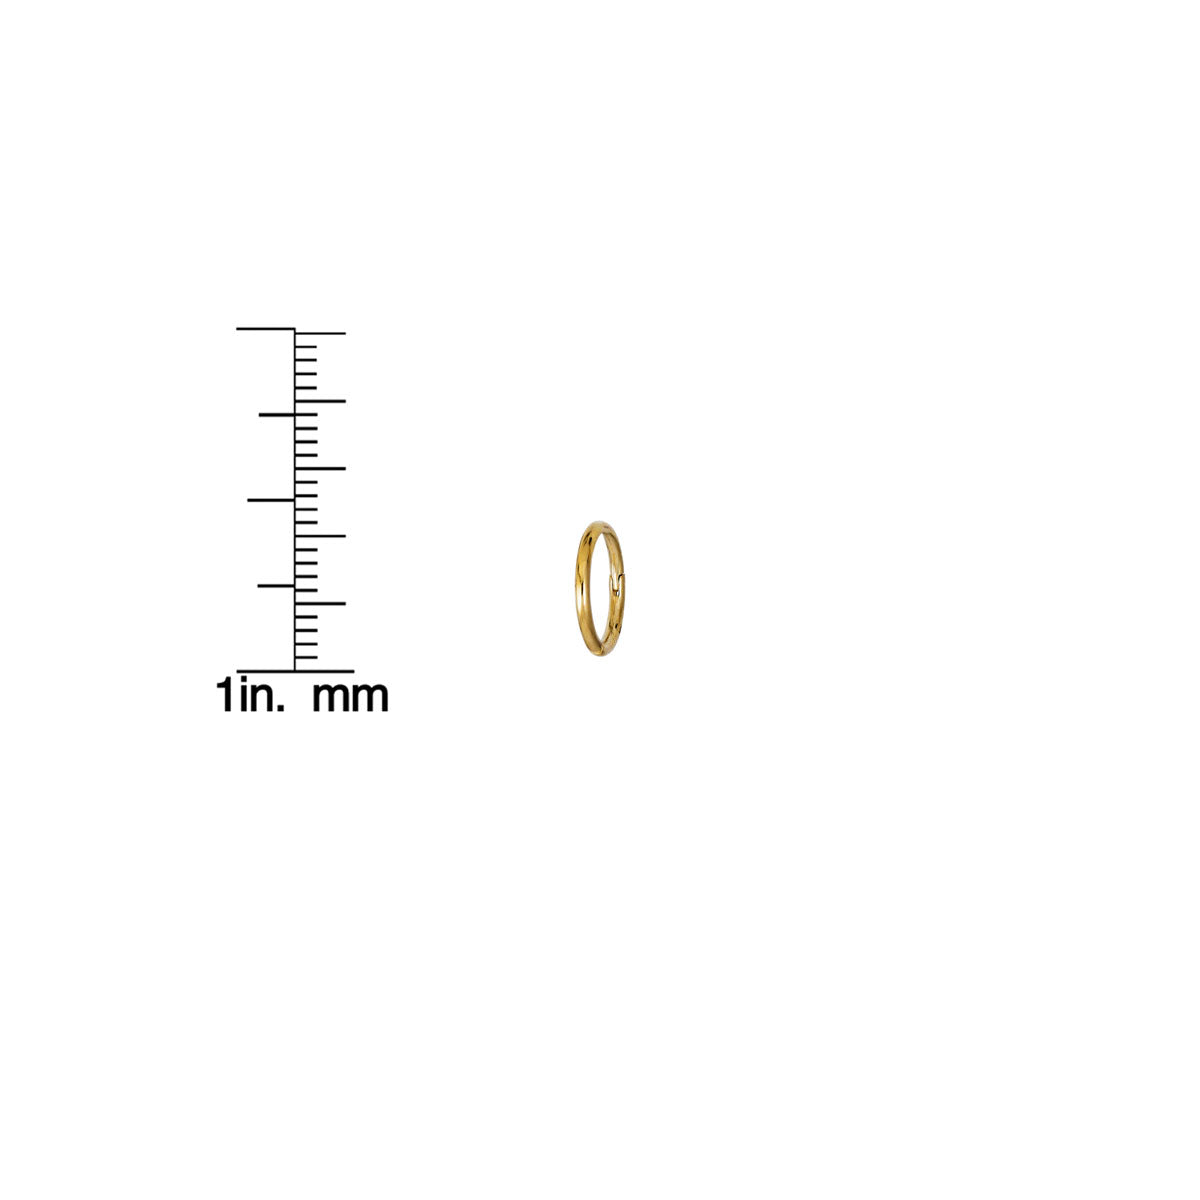 10mm infinity gold hoop earring sizing_deb0cf0b 9bbe 4fd7 8adc 9608ca01317b